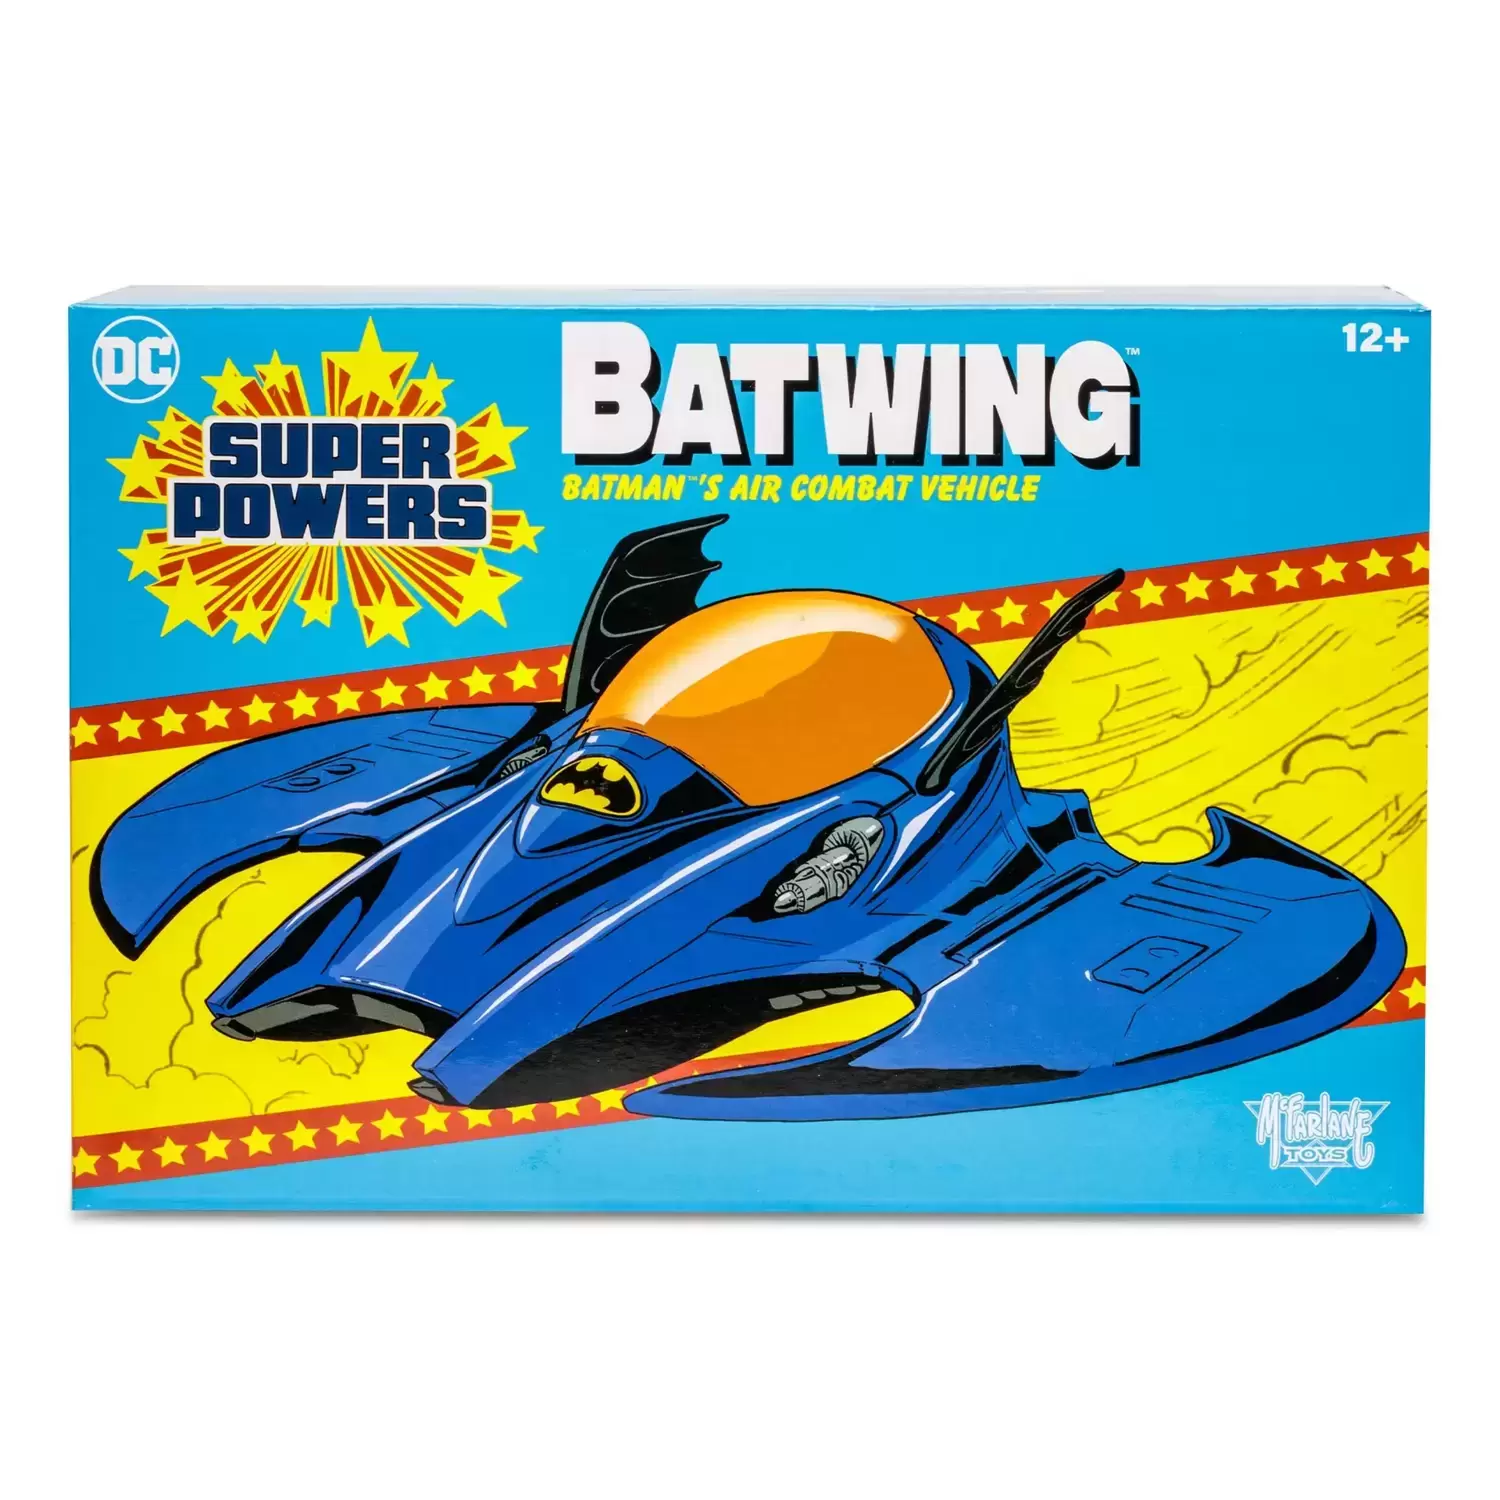 McFarlane - DC Super Powers - Batwing